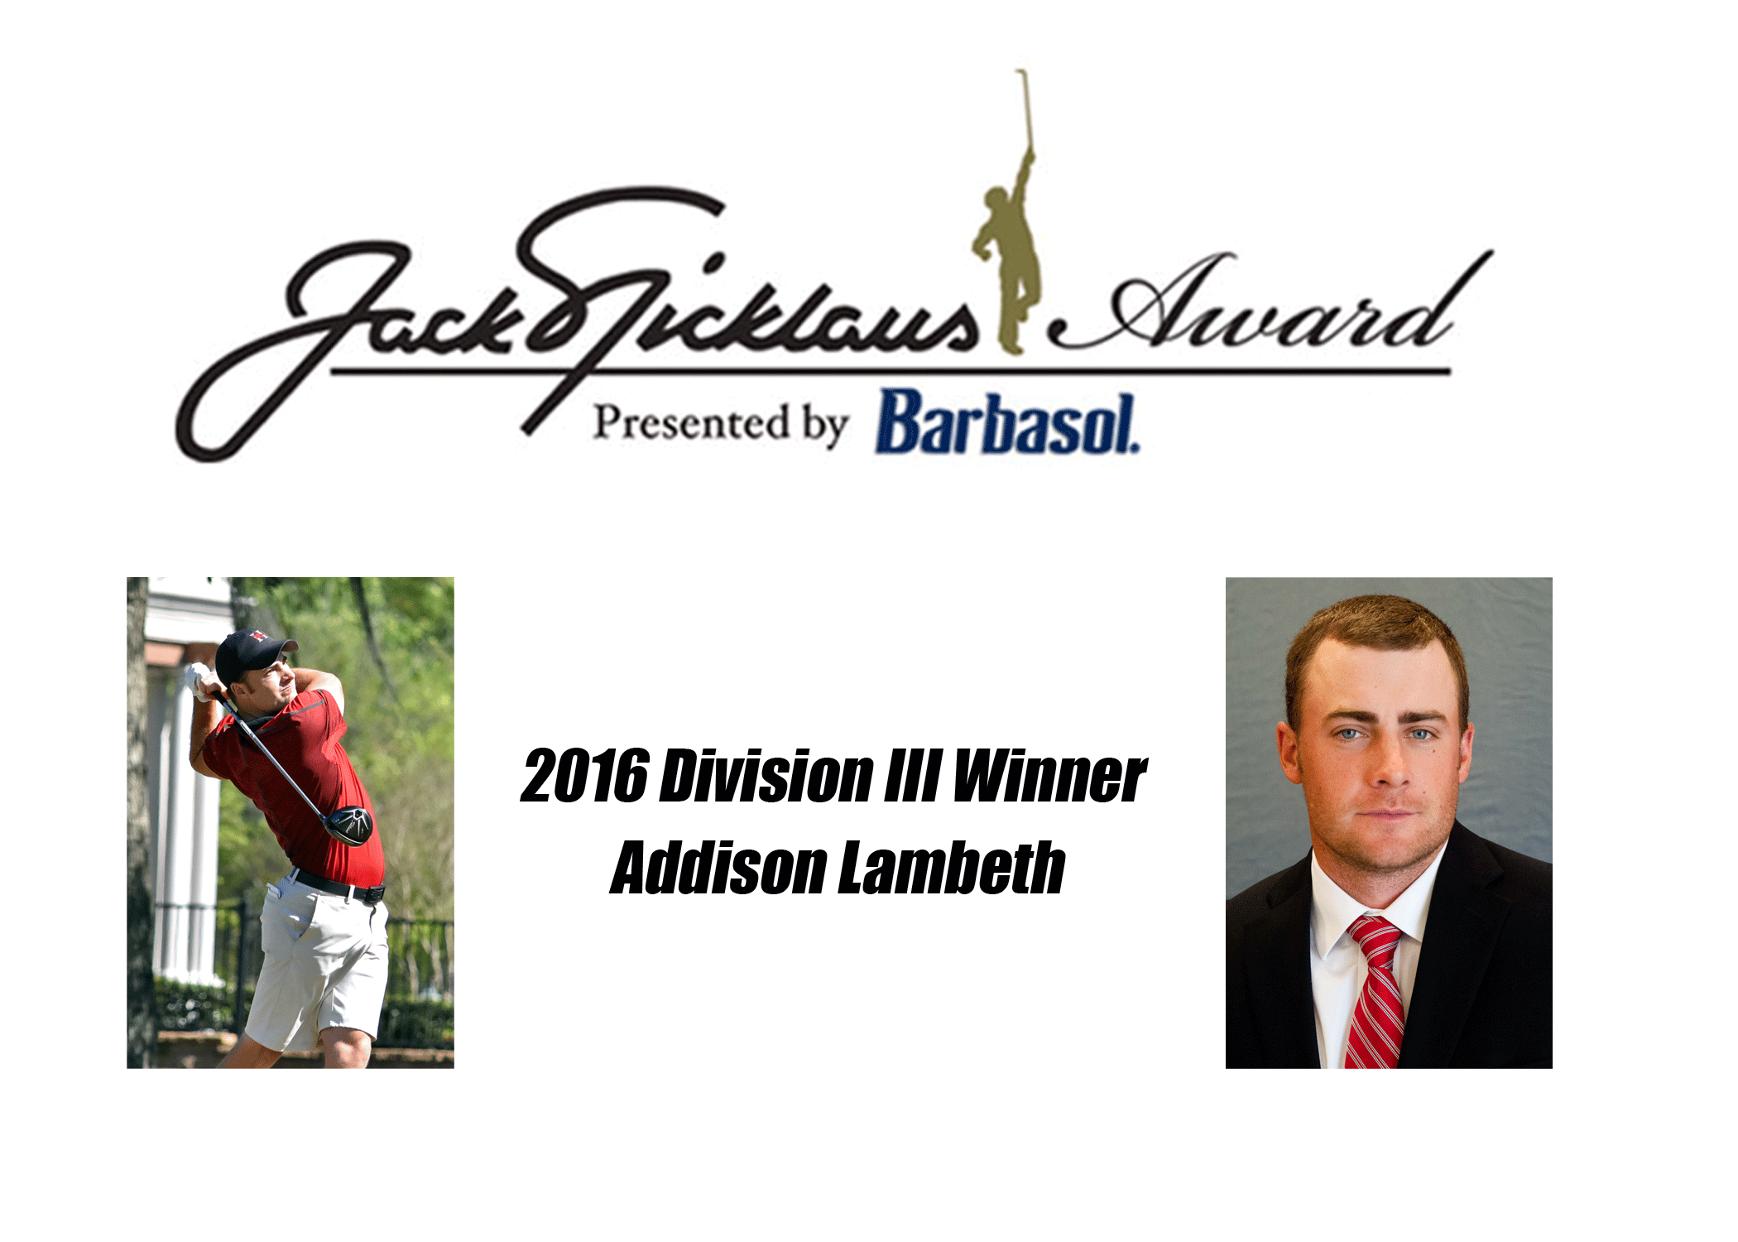 Lambeth named Division III Jack Nicklaus Award winner